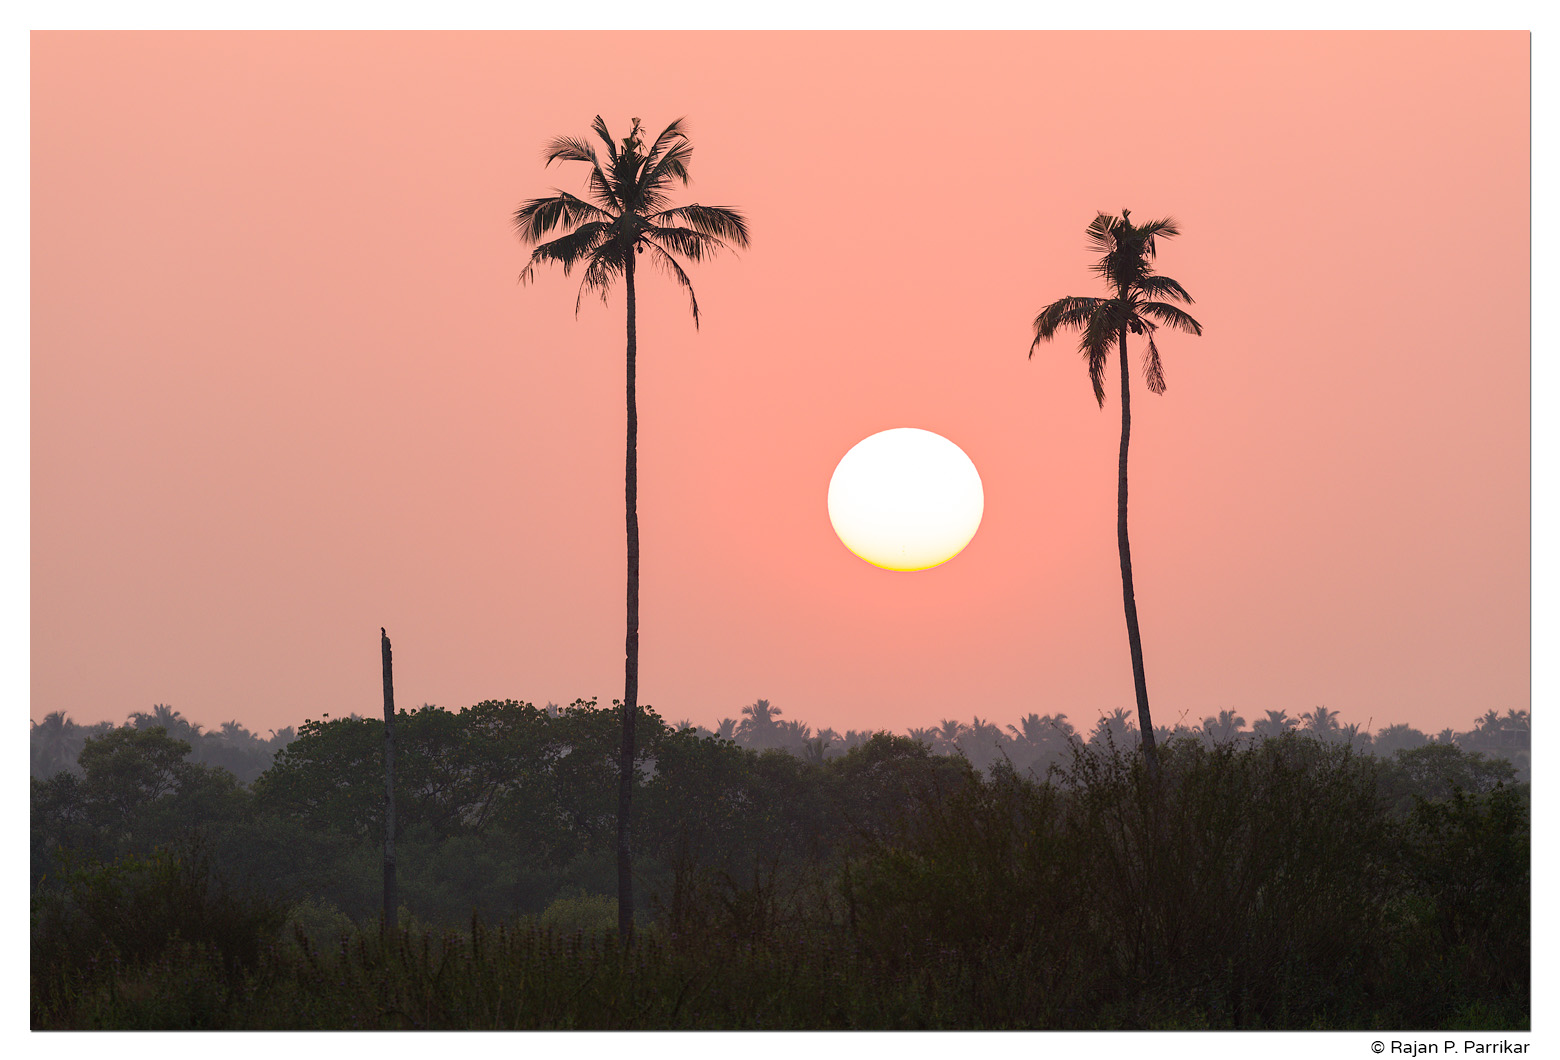 December 31, 2021, sunset in Calapur, Goa